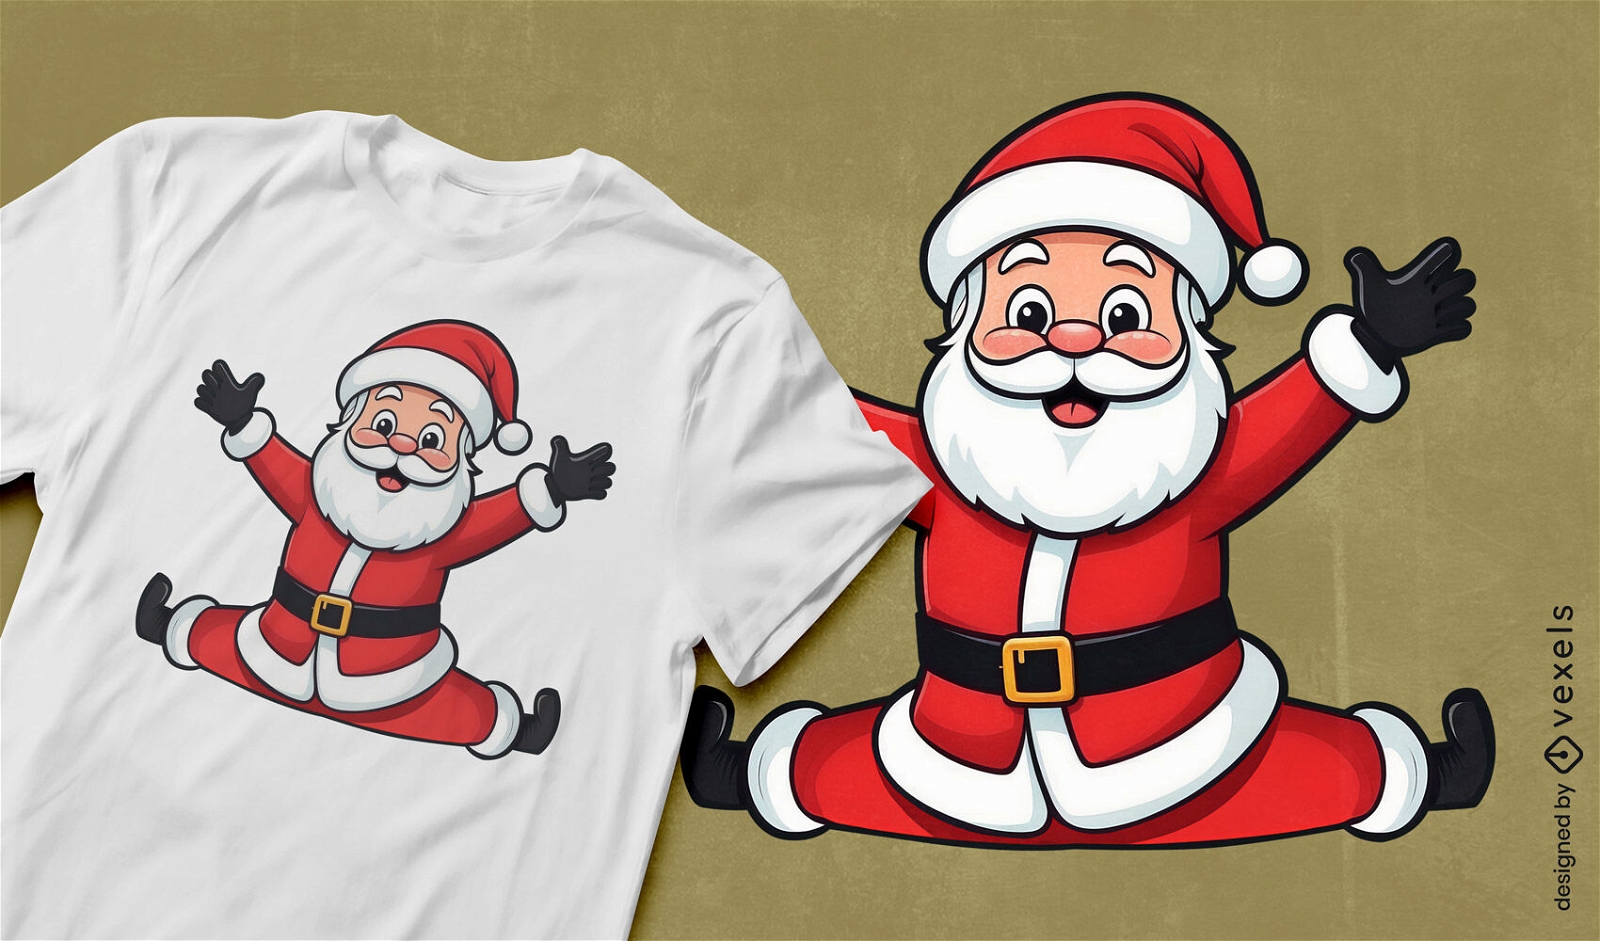 Cheerful Santa splits t-shirt design